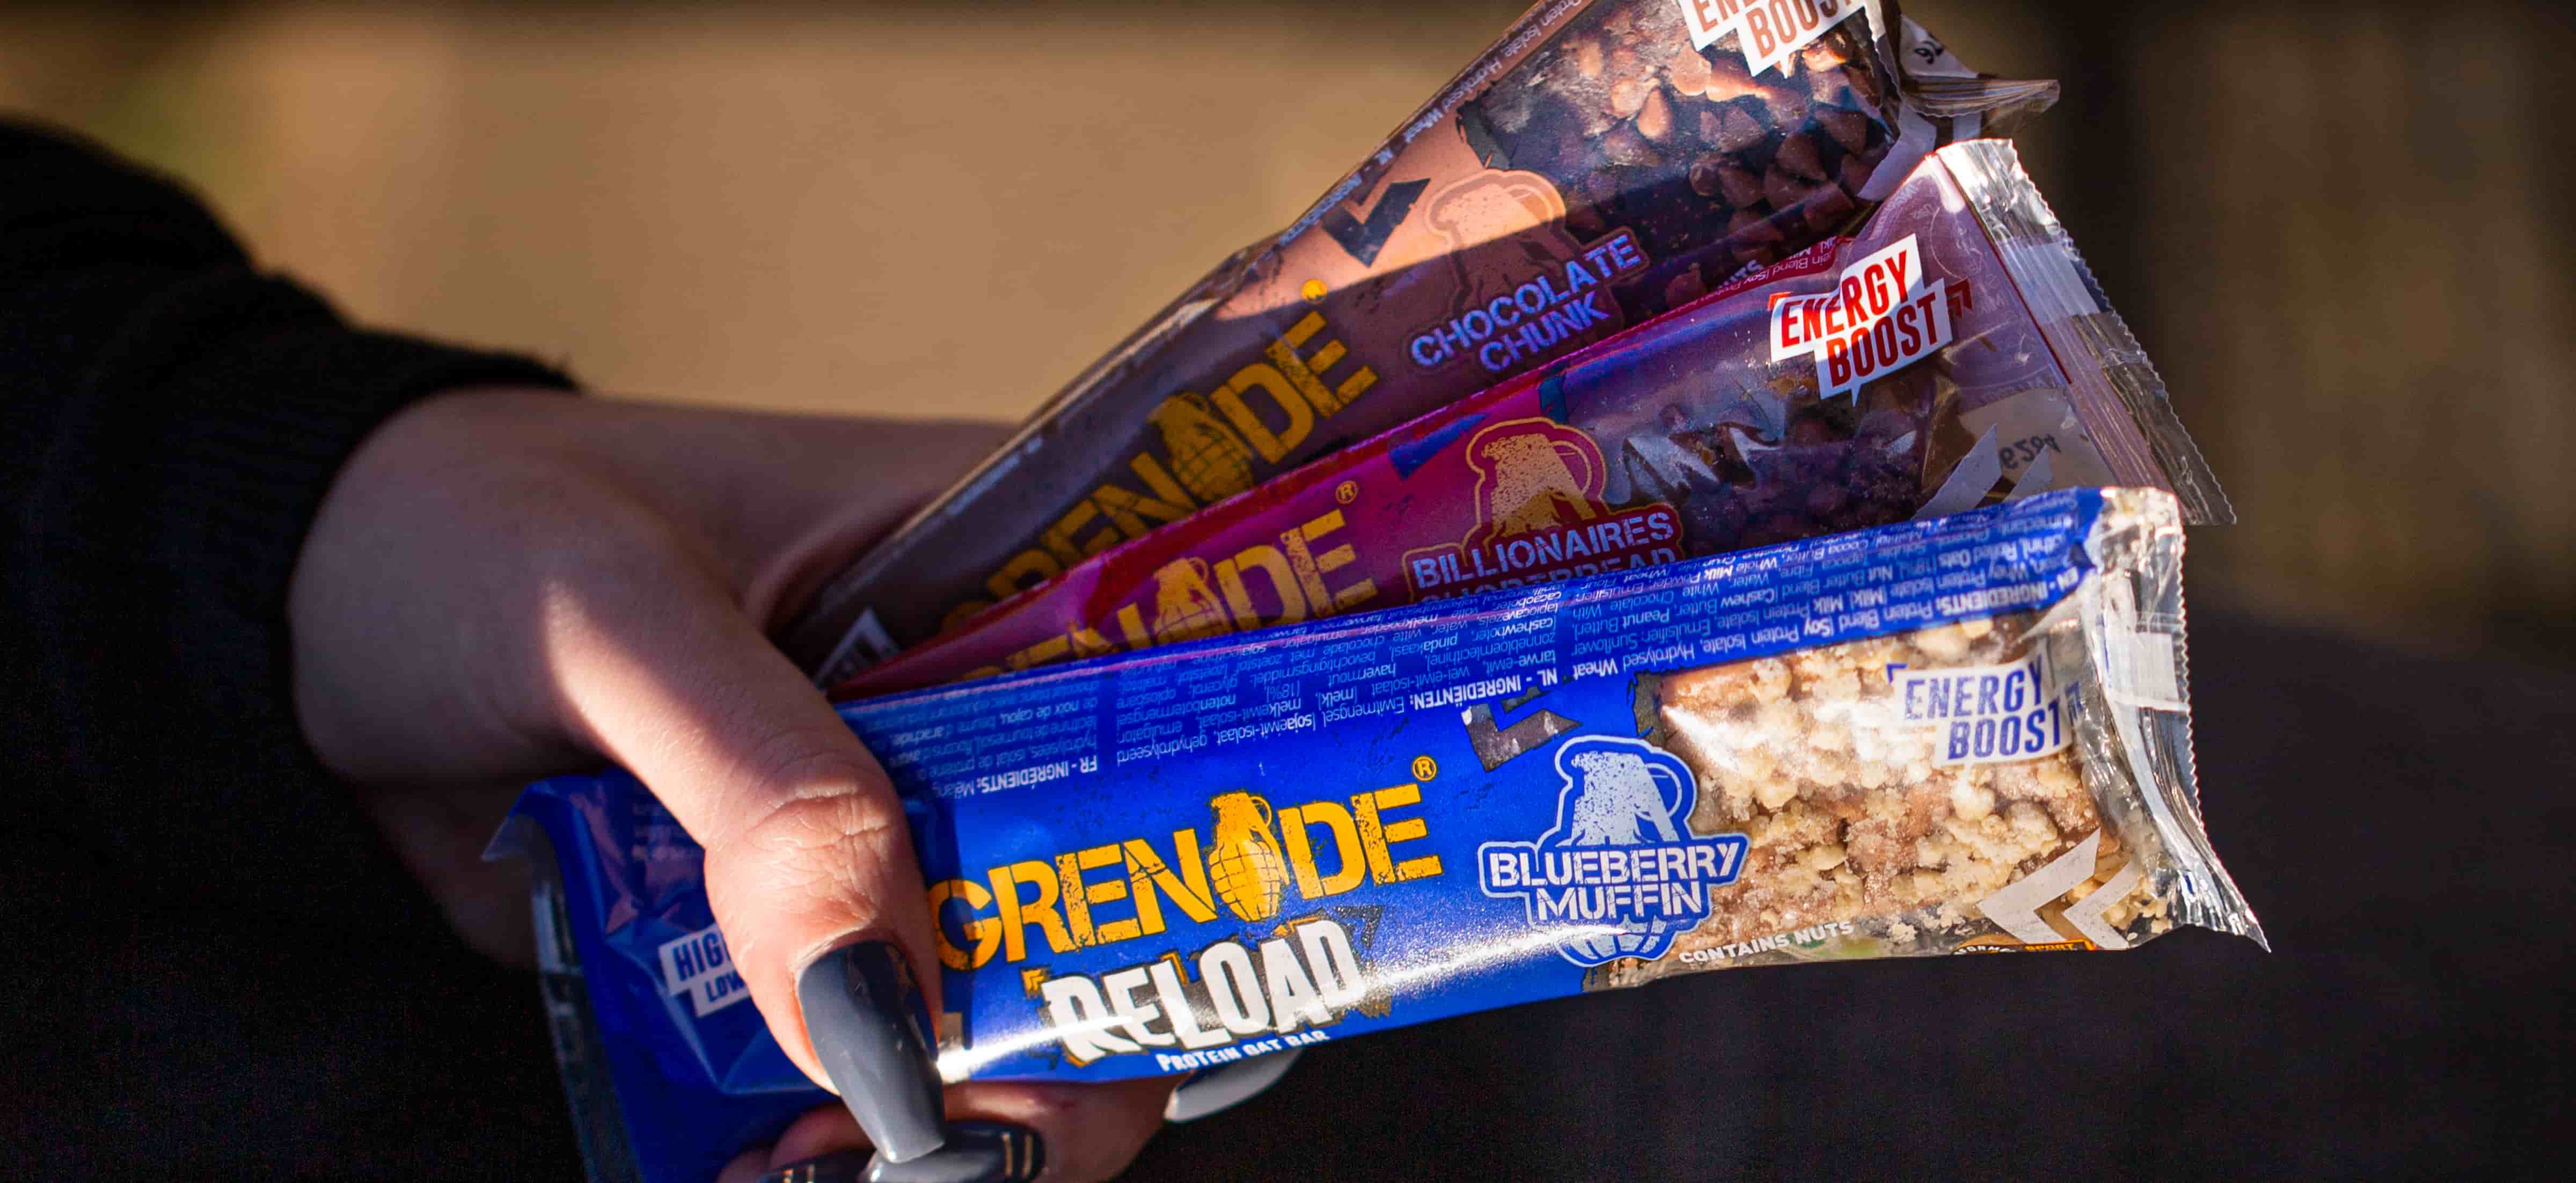 Grenade Reload oat energy bar